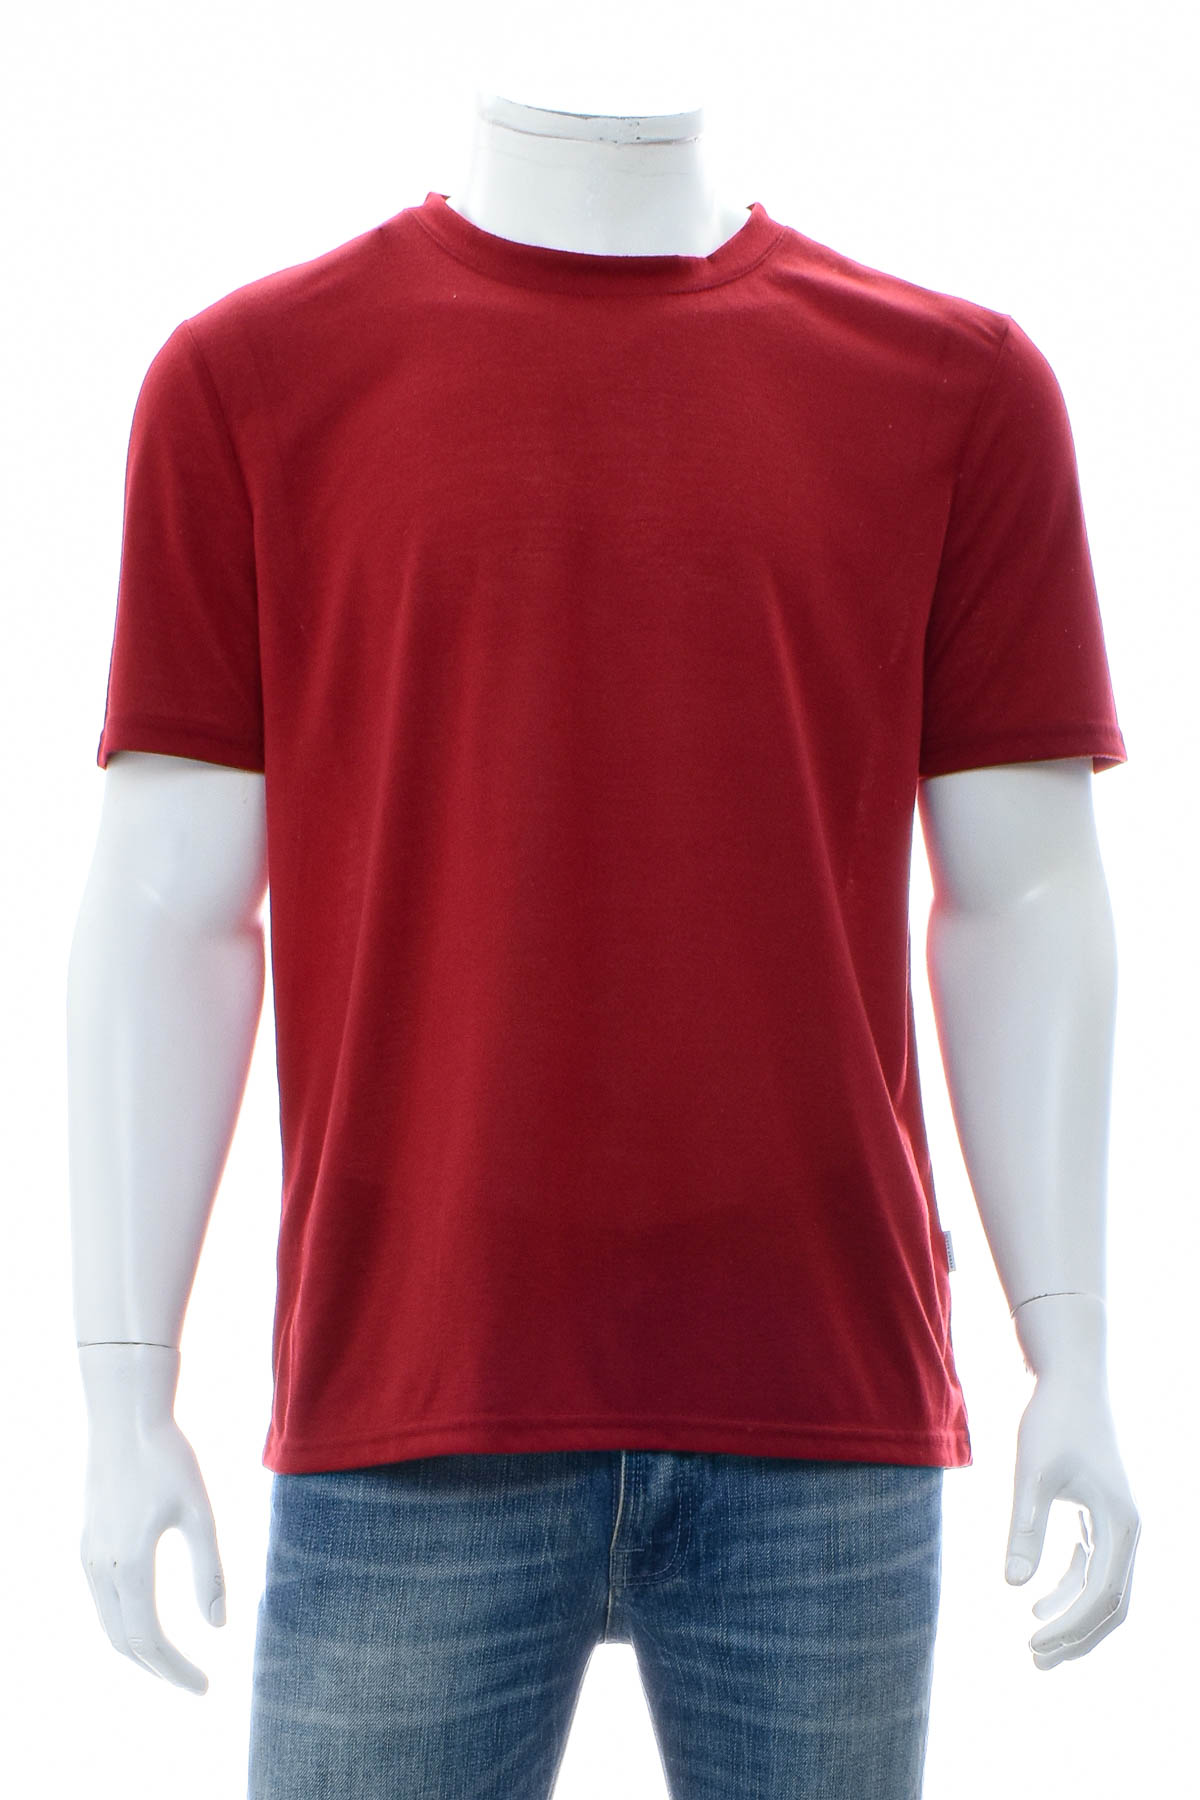 Men's T-shirt - Perry Ellis - 0